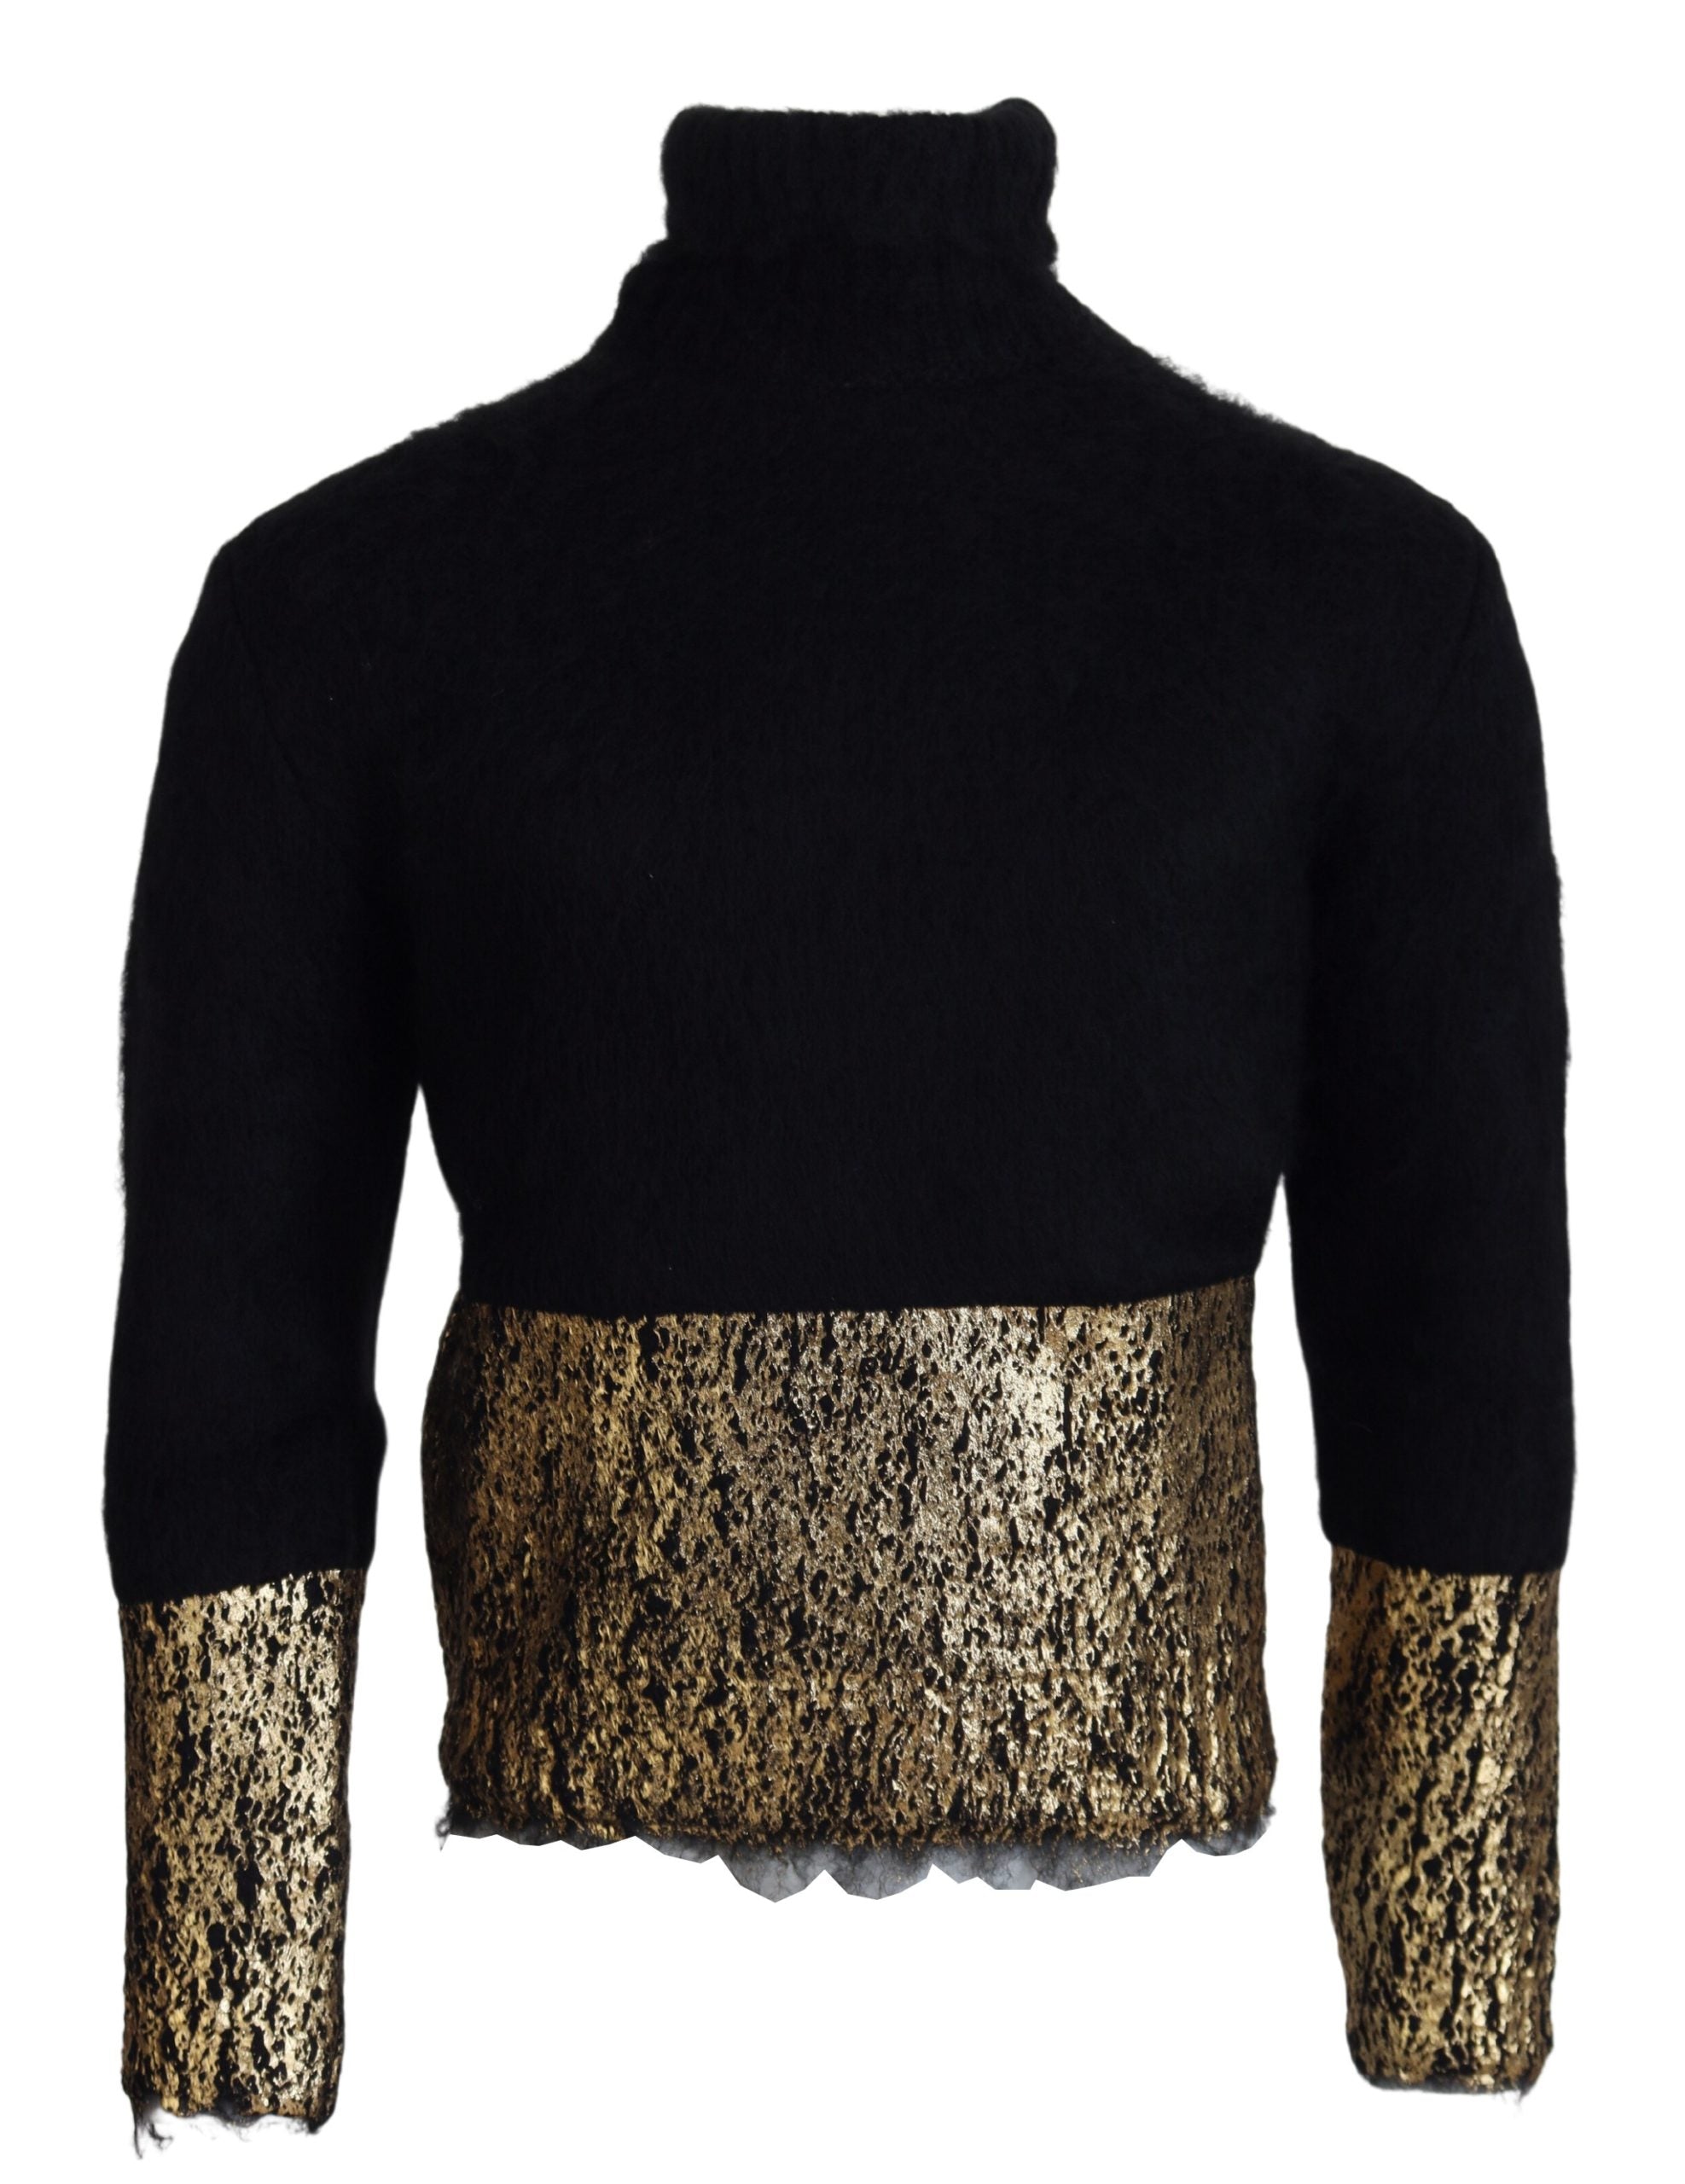 Stunning Black and Gold Crewneck Sweater